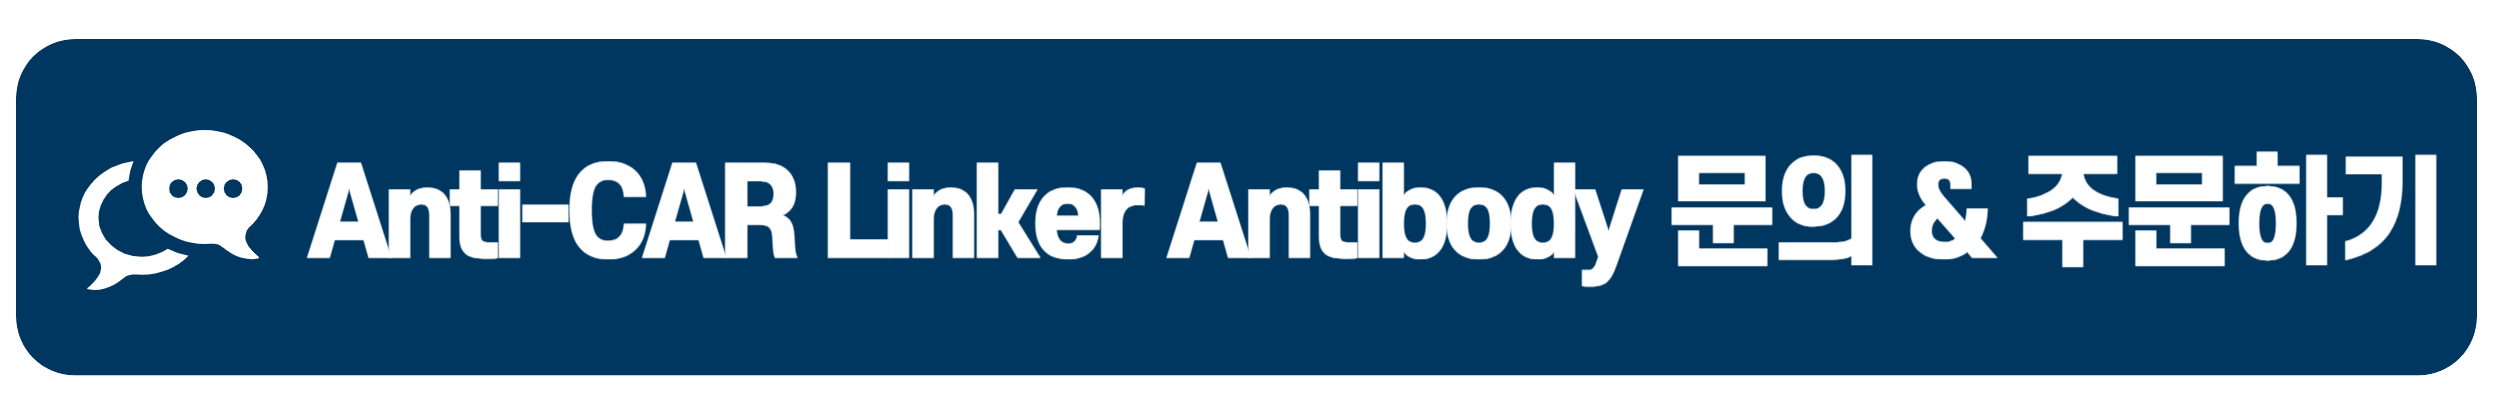 Anti-CAR Linker Antibody 문의 & 주문하기